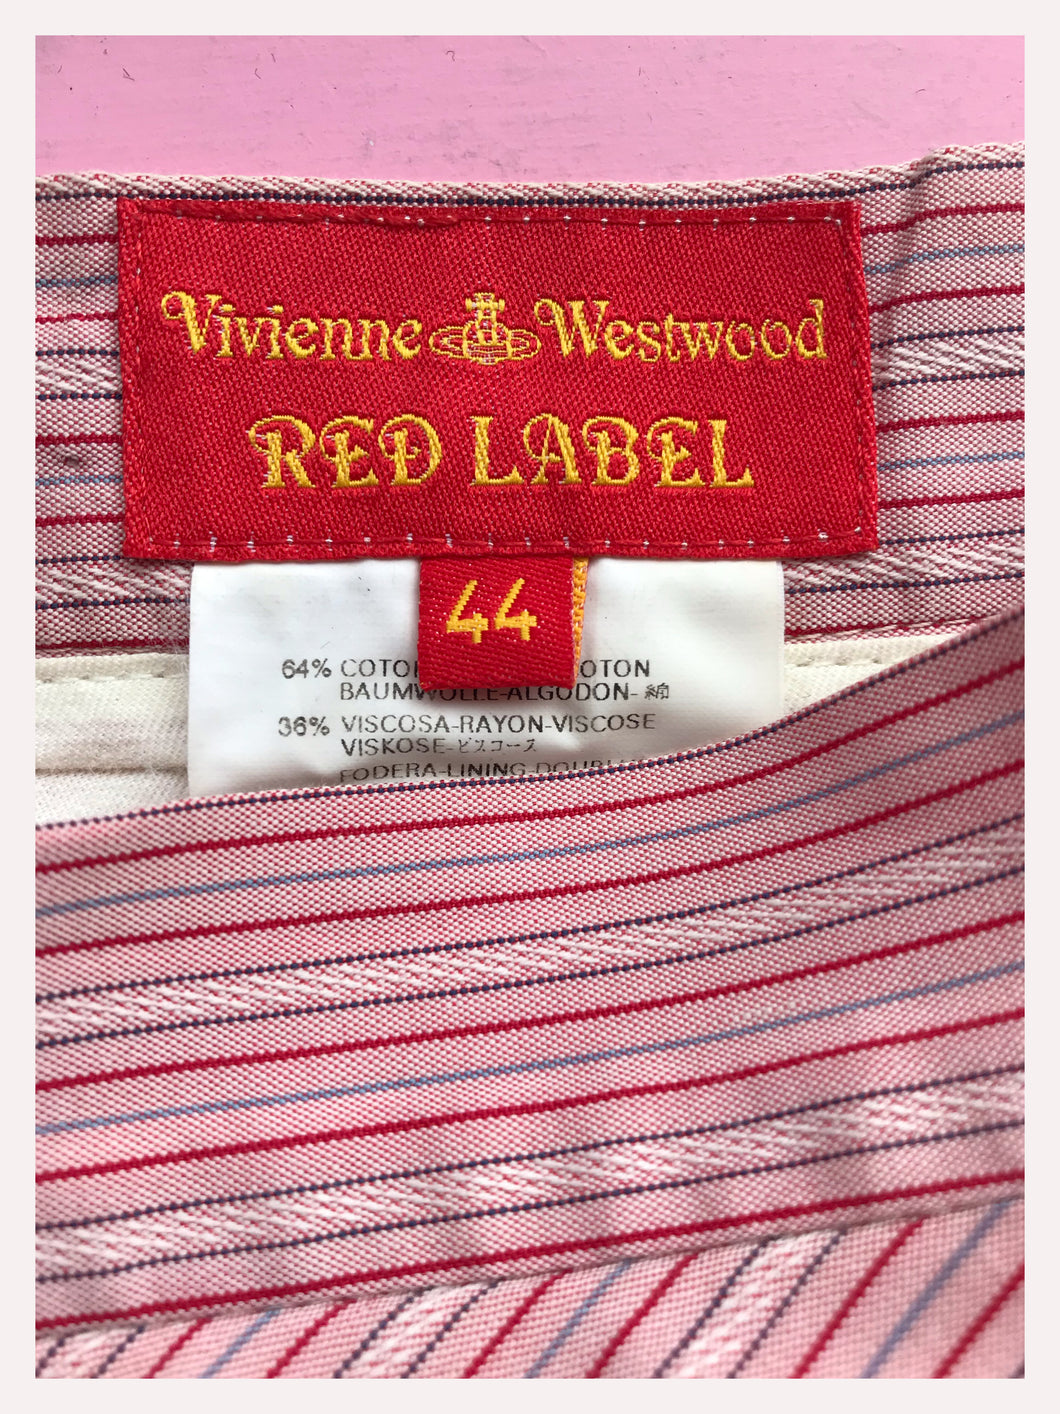 Vivianne Westwood Red Label Skirt from Dress, in Bridport